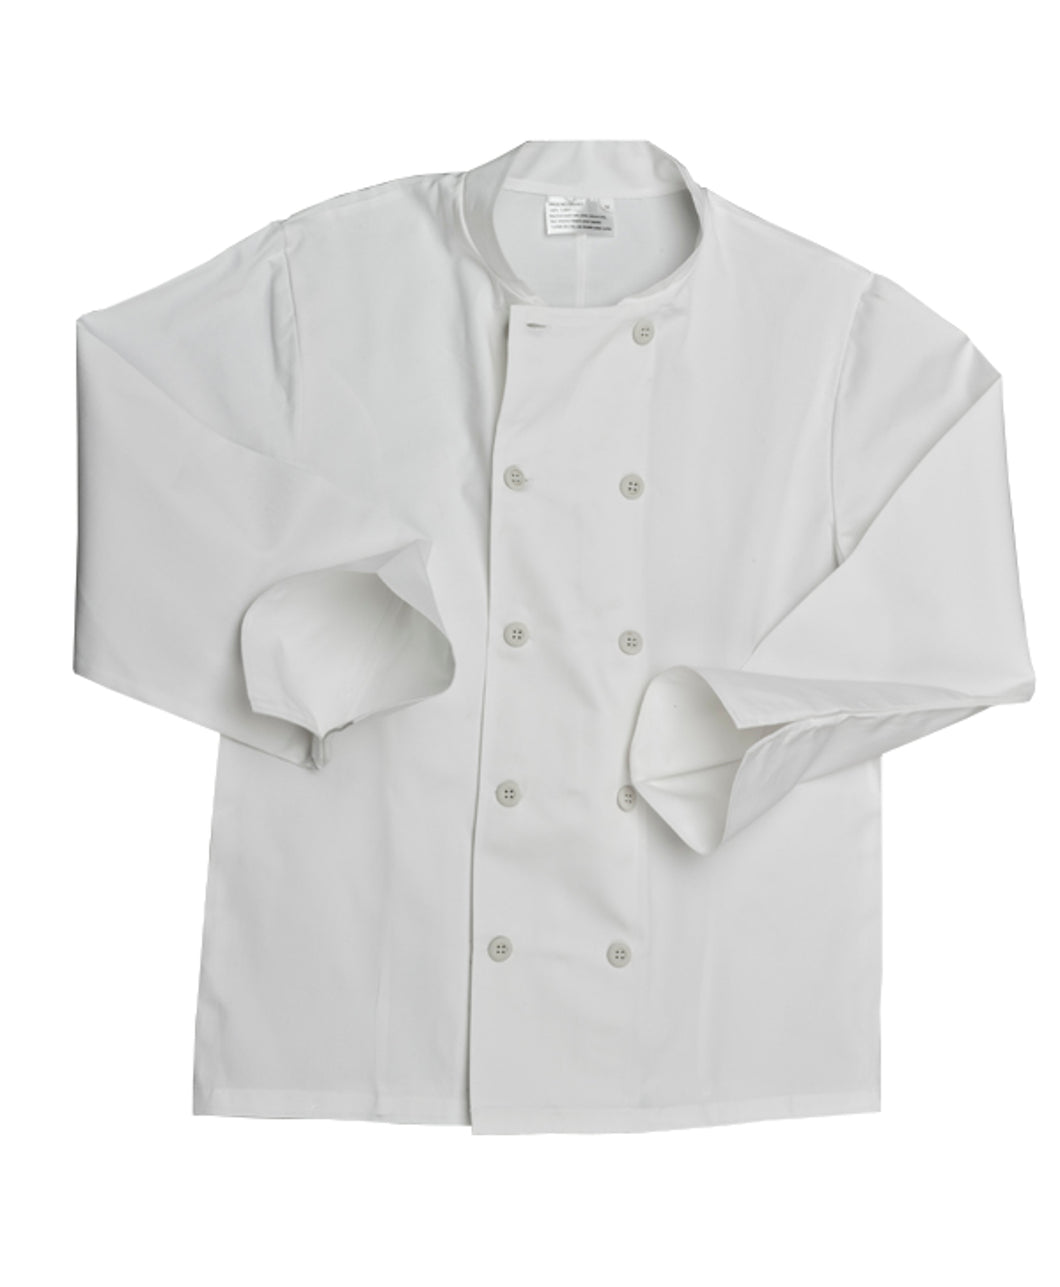 https://images.esellerpro.com/2278/I/508/15/CHJ-007-long-sleeved-chefs-jacket-rubber-buttons-white.jpg